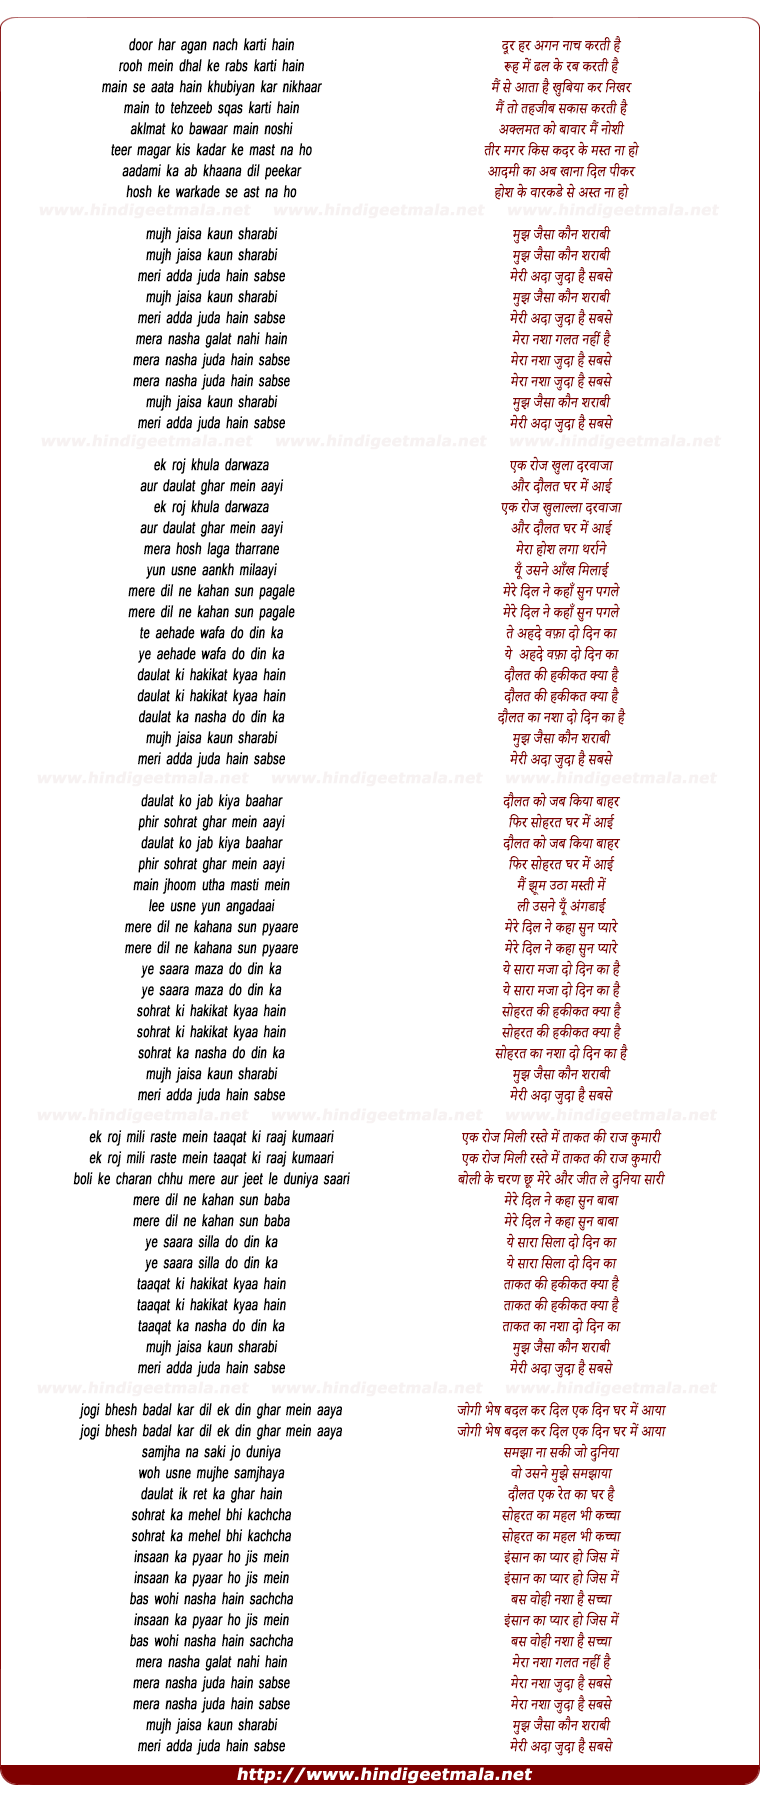 lyrics of song Mujh Jaisa Kaun Sharabi Mera Nasha Judaa Hai Sabse